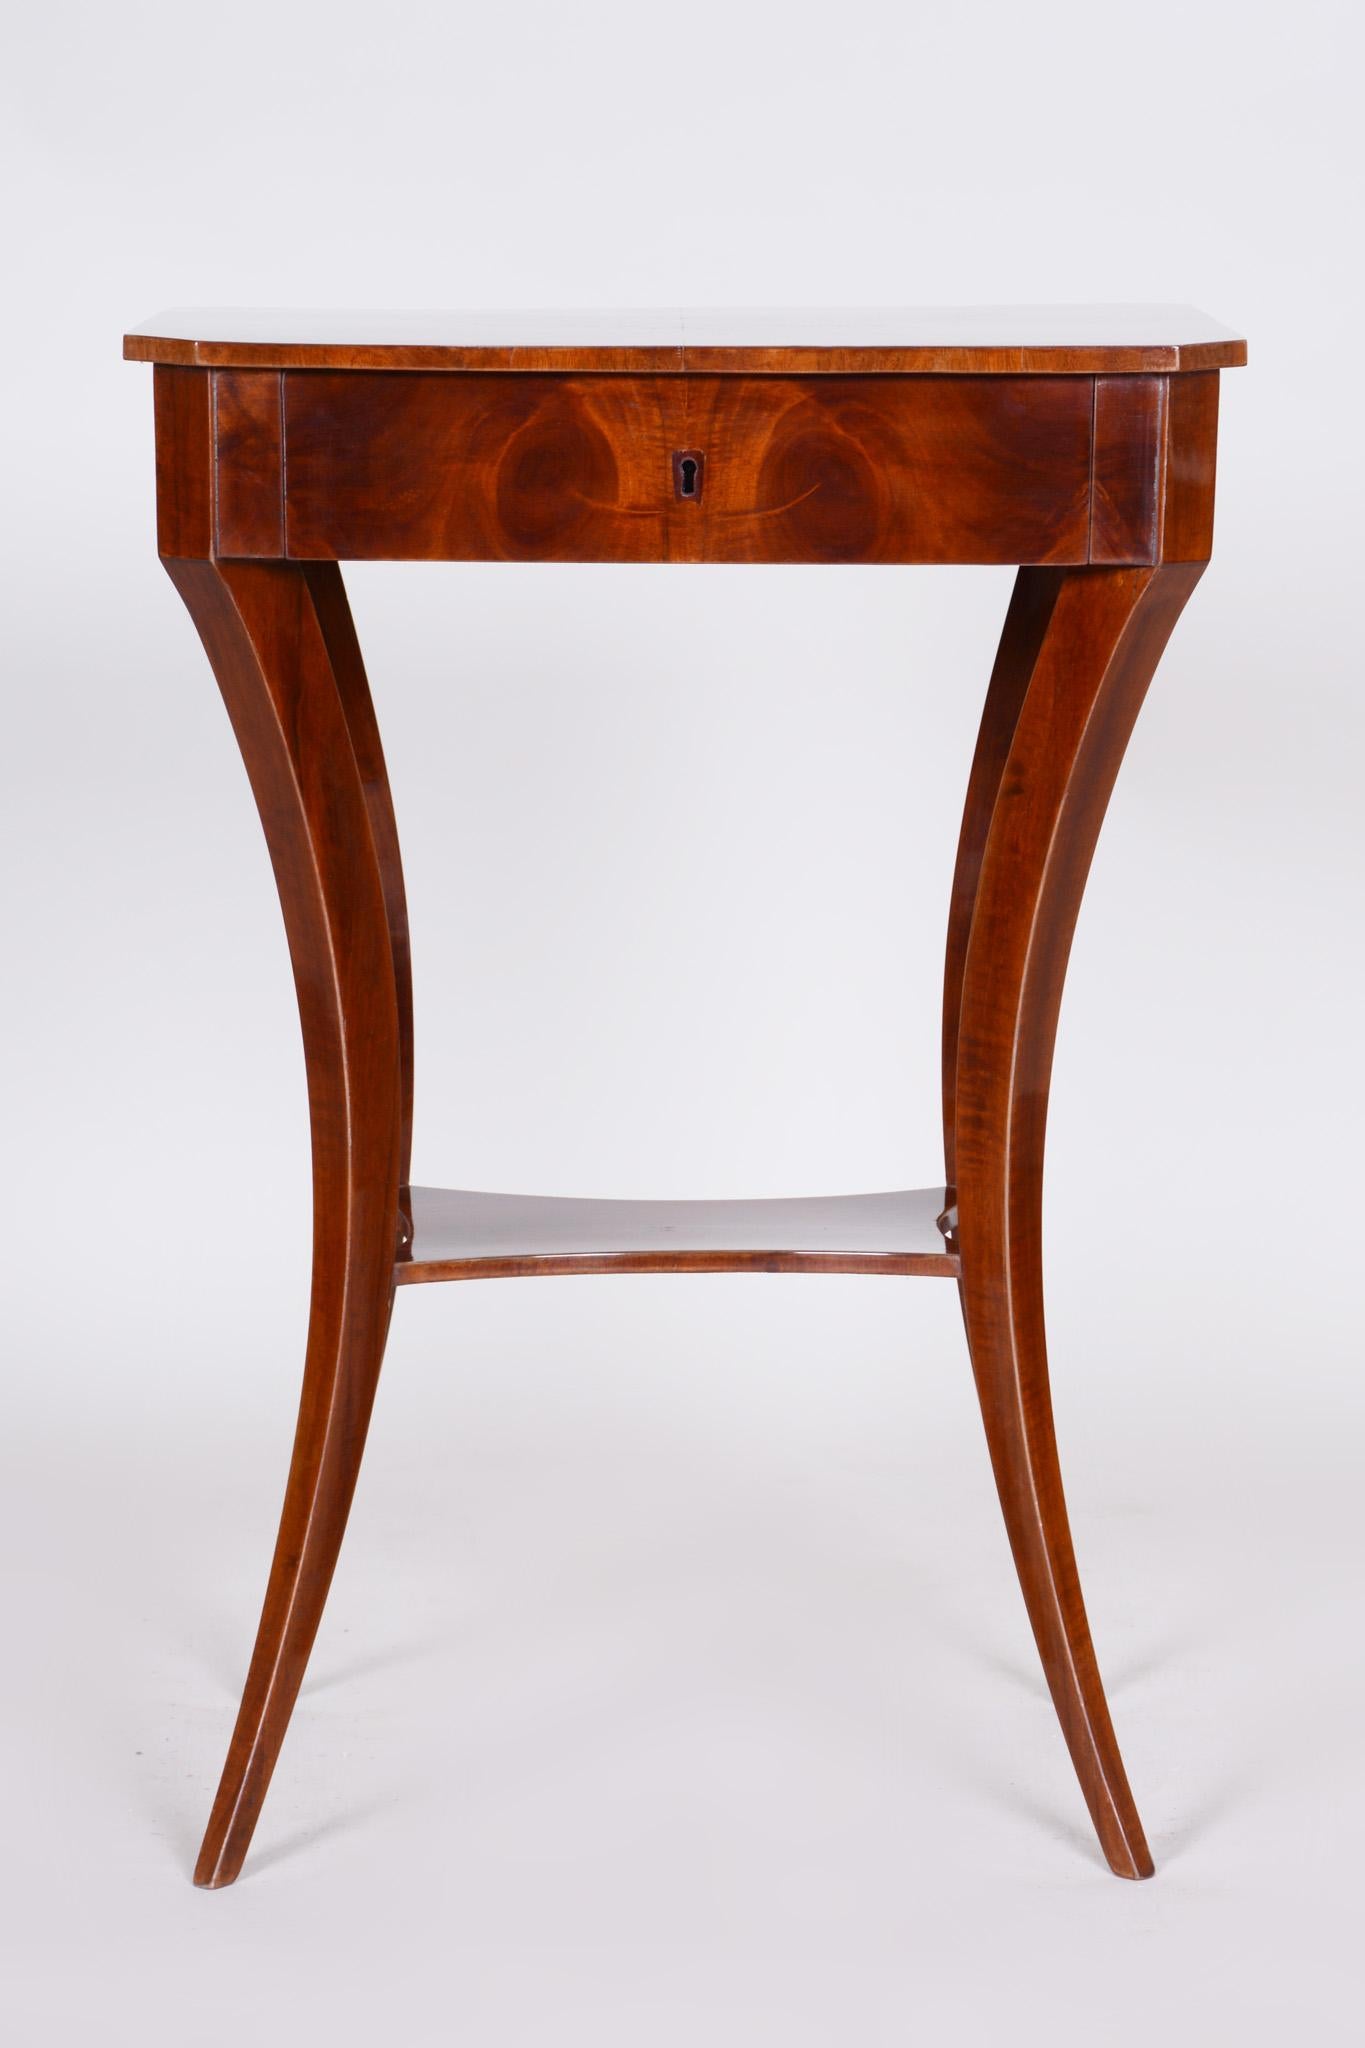 German Biedermeier small table.
Period: 1830-1839
Material: Walnut
Shellac polished.